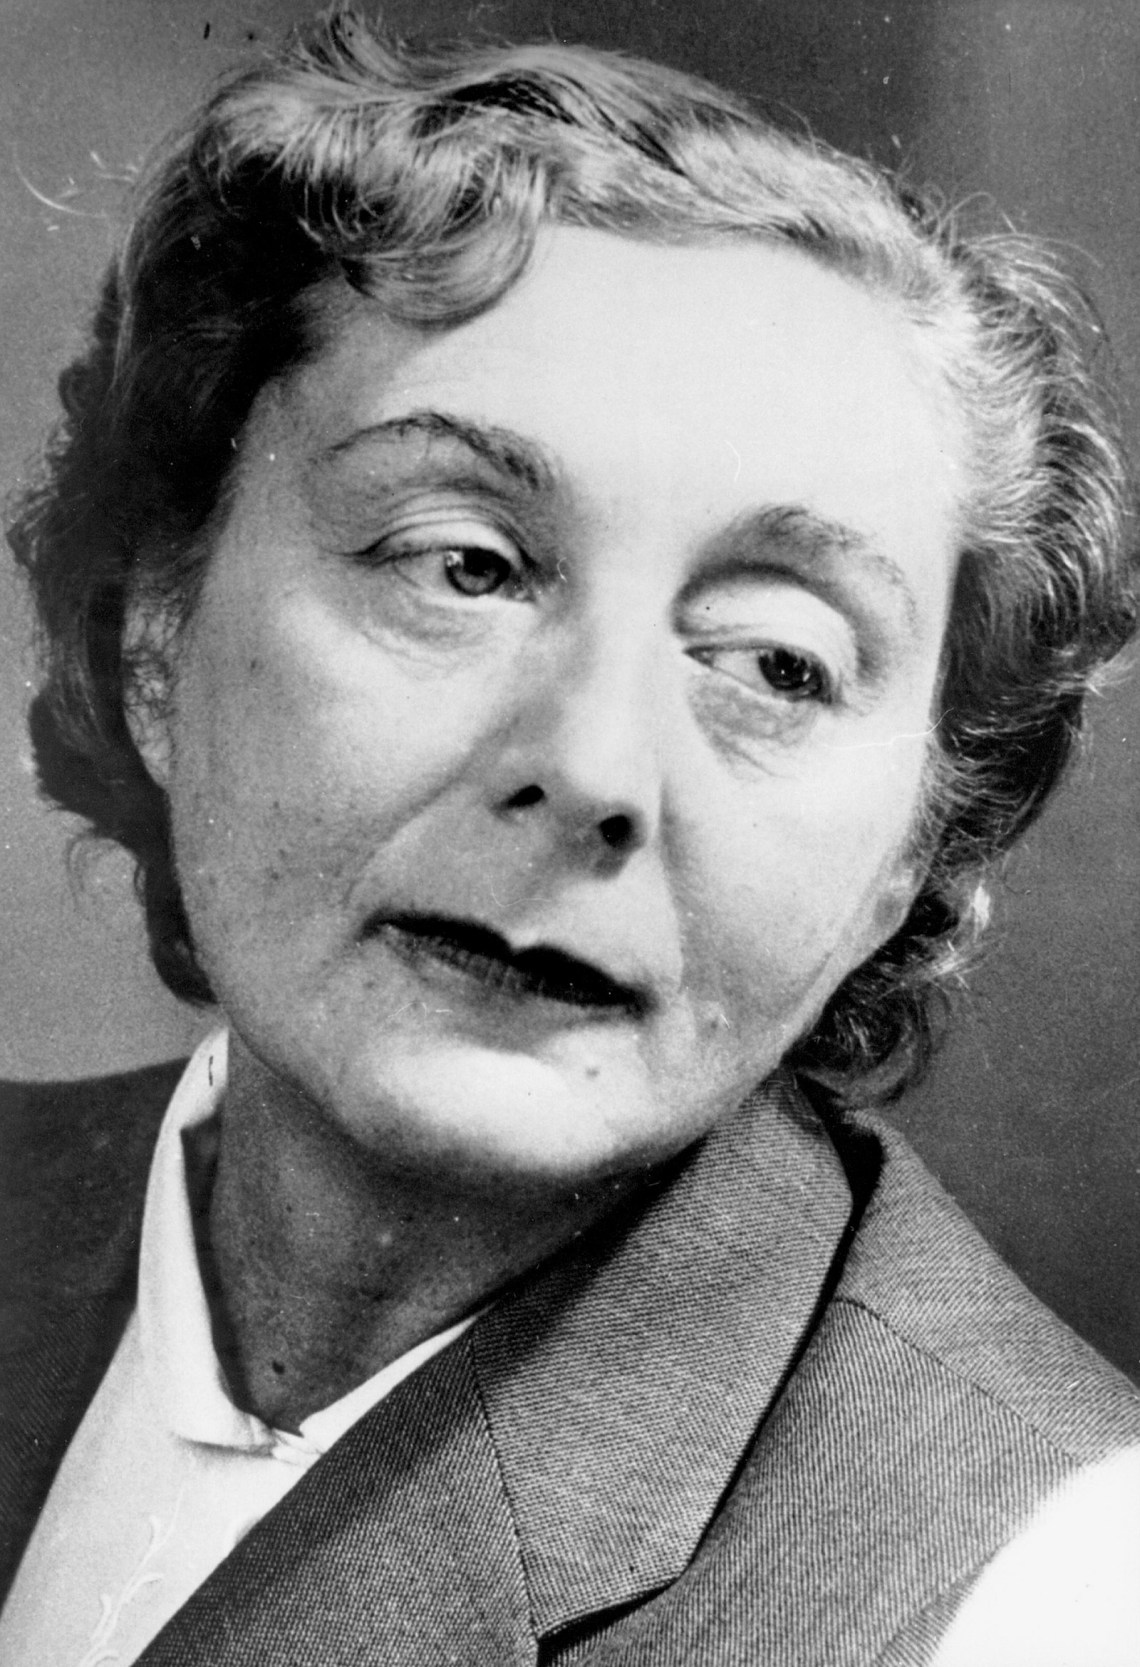 Jenny Erpenbeck’s grandmother, the East German writer Hedda Zinner